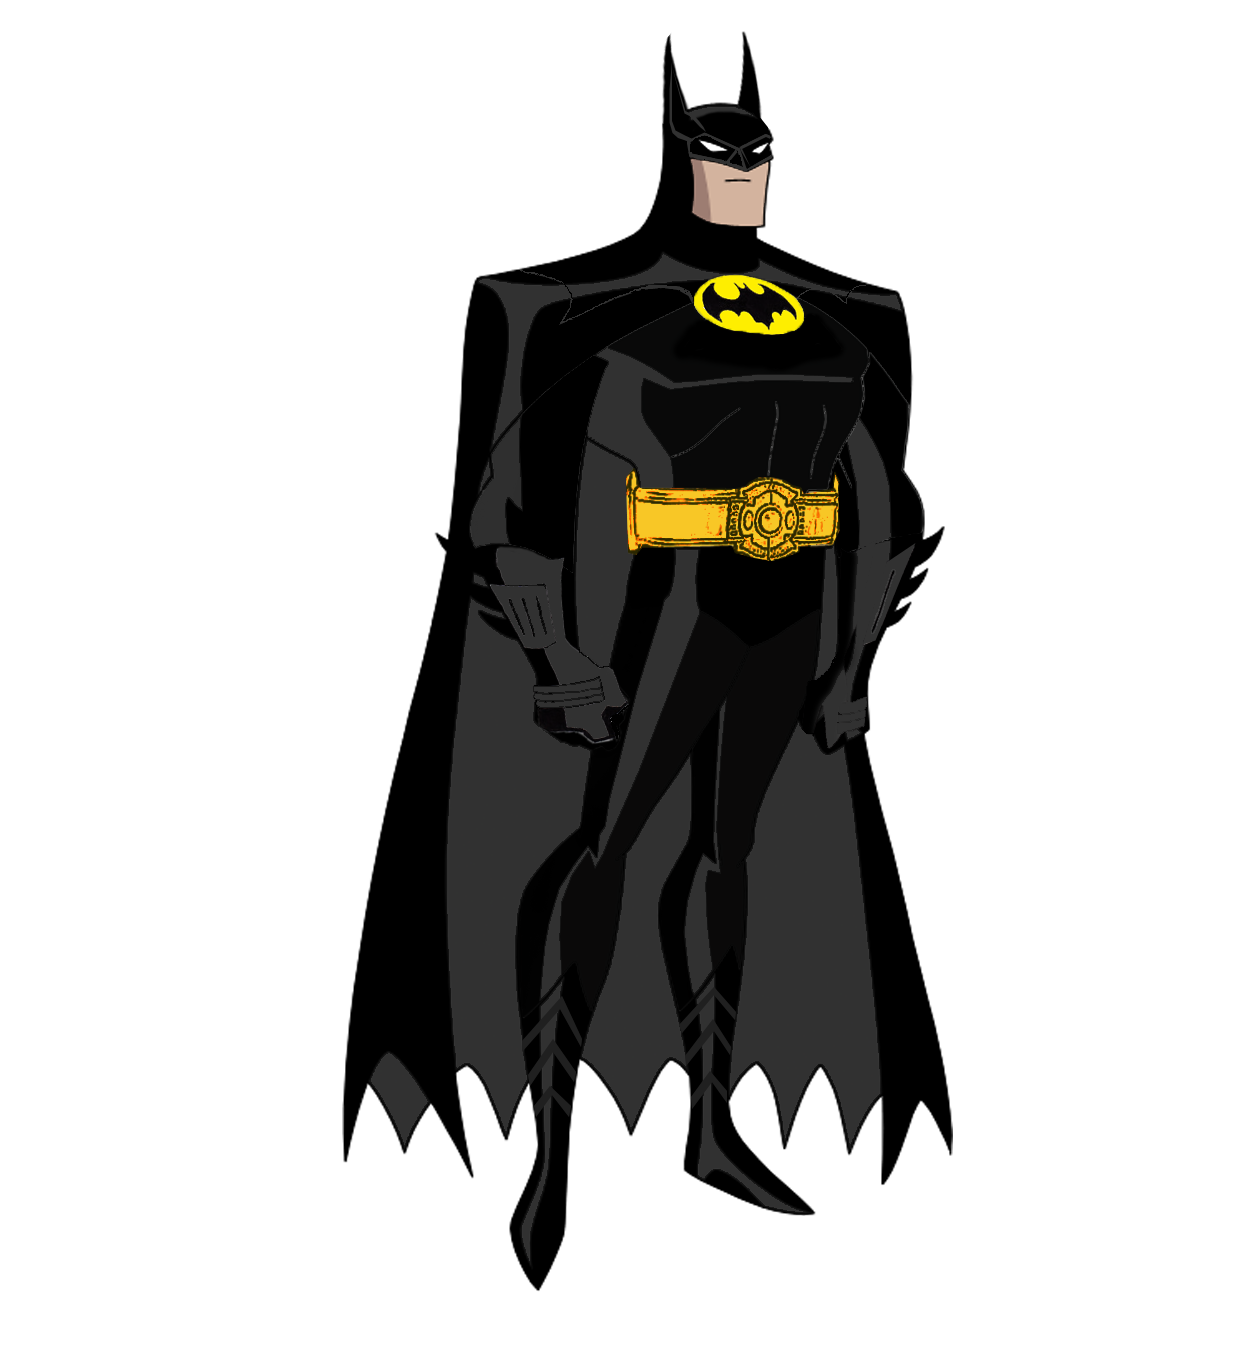 Batman PNG images free download.